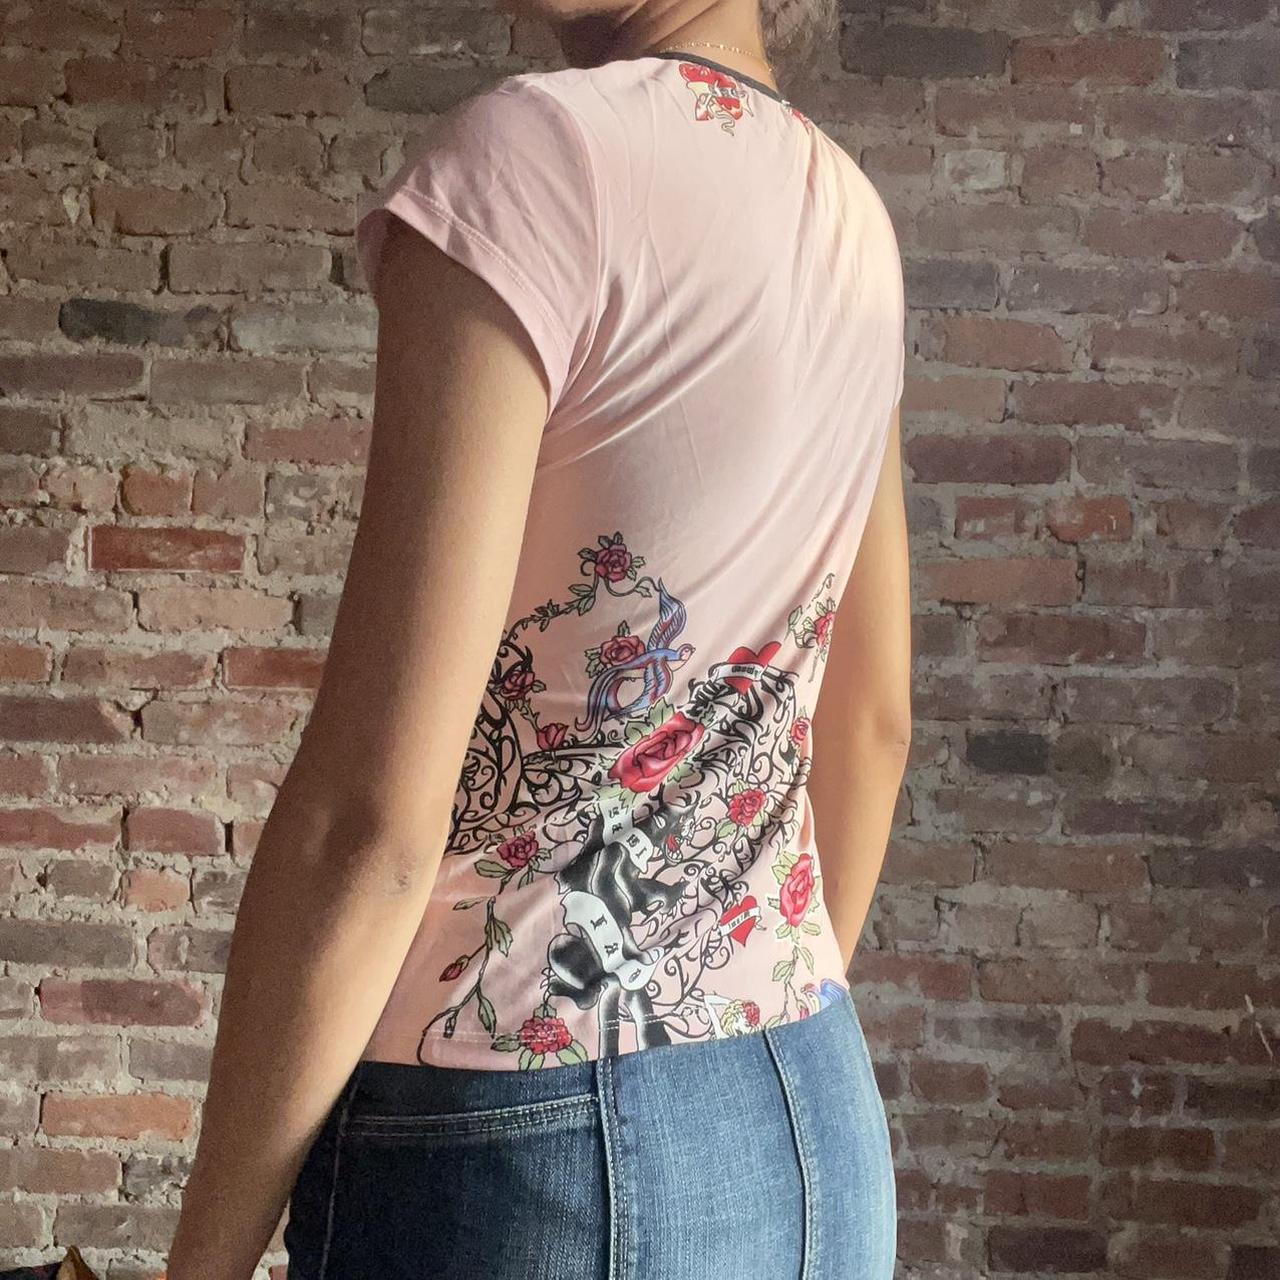 Product Image 3 - pink t shirt w tattoo